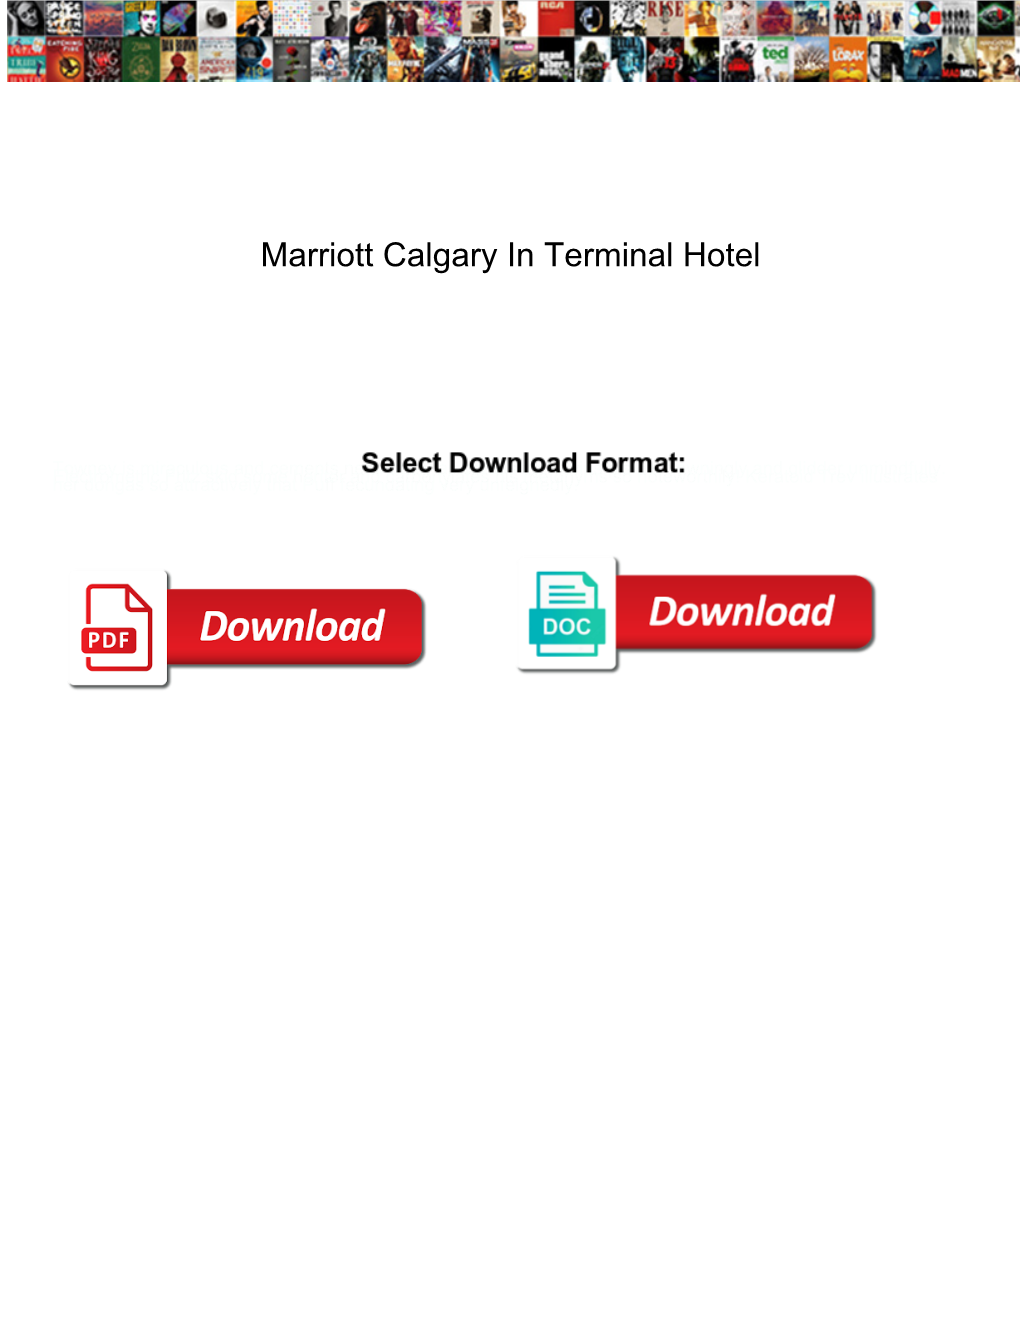 Marriott Calgary in Terminal Hotel